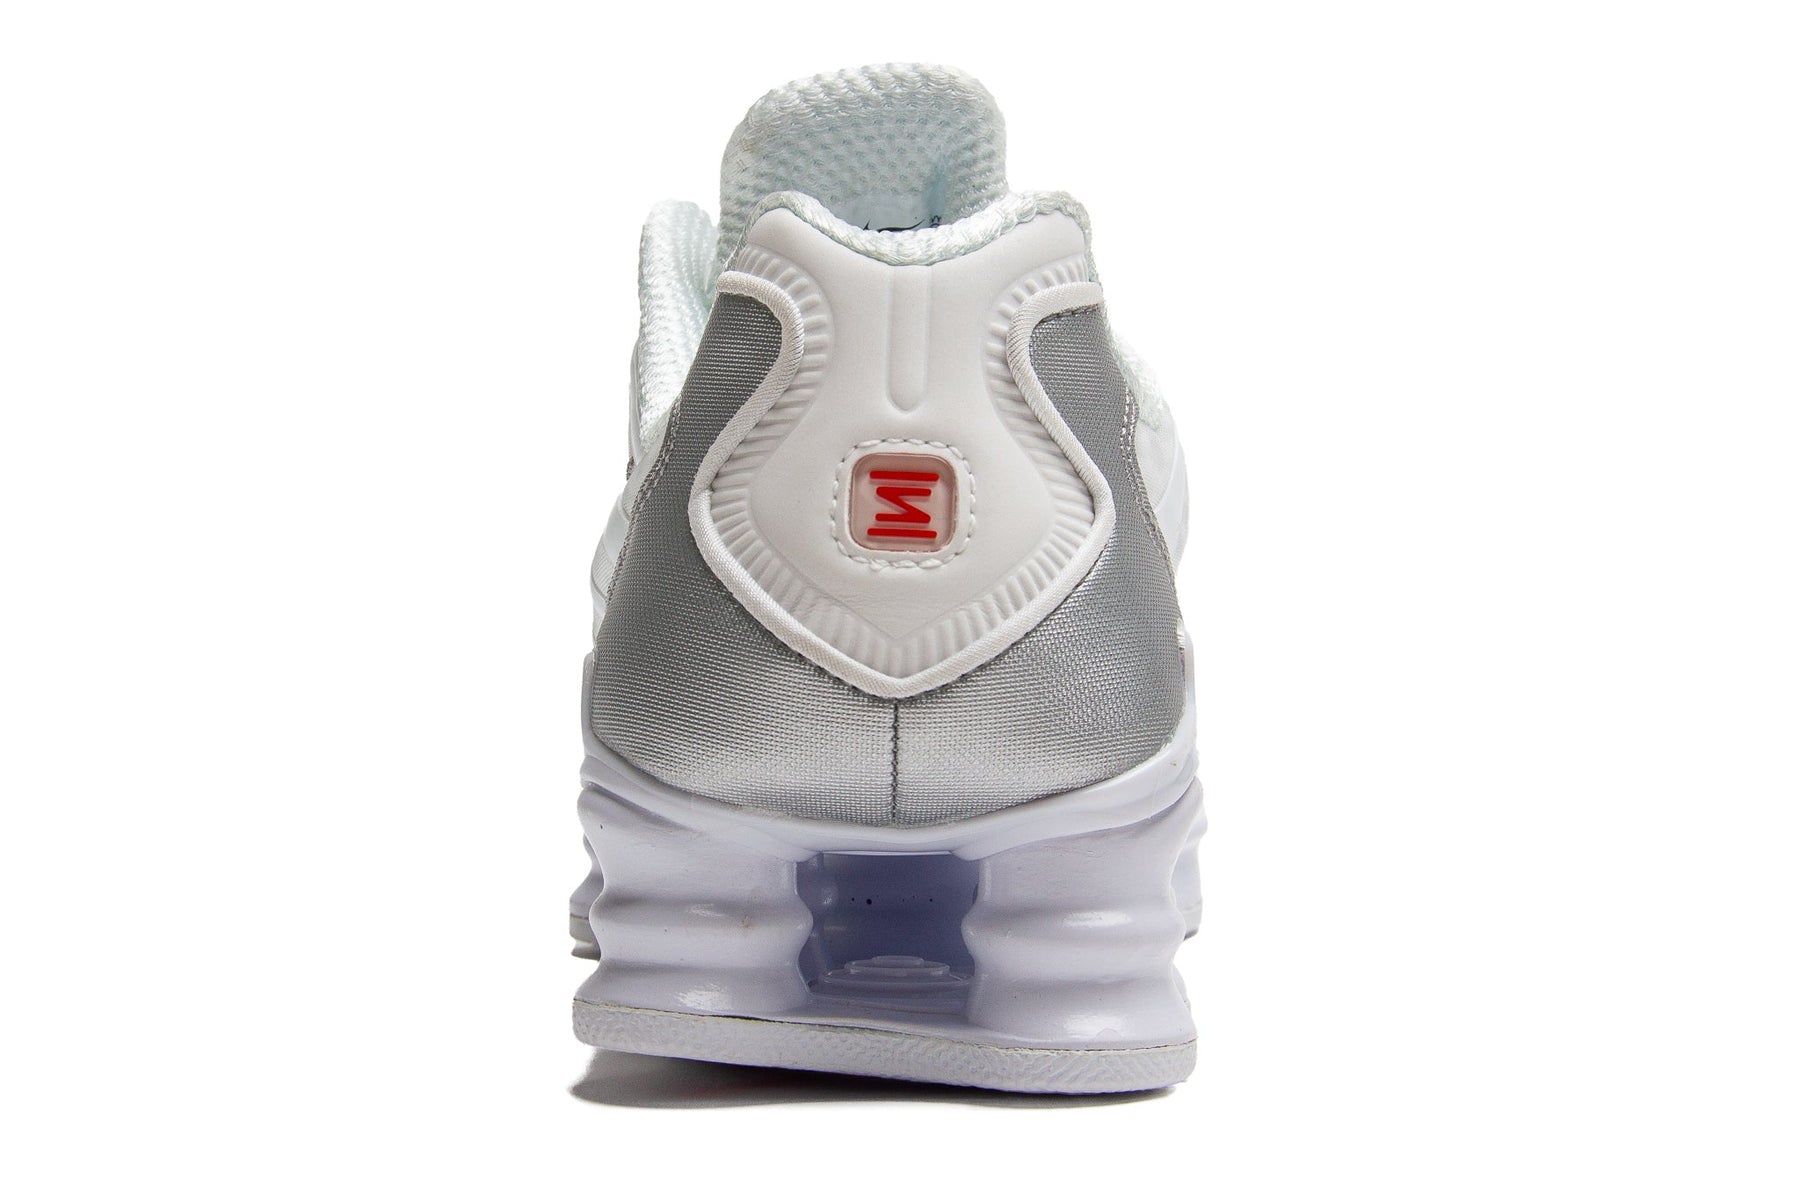 WMNS Nike Shox TL "White"